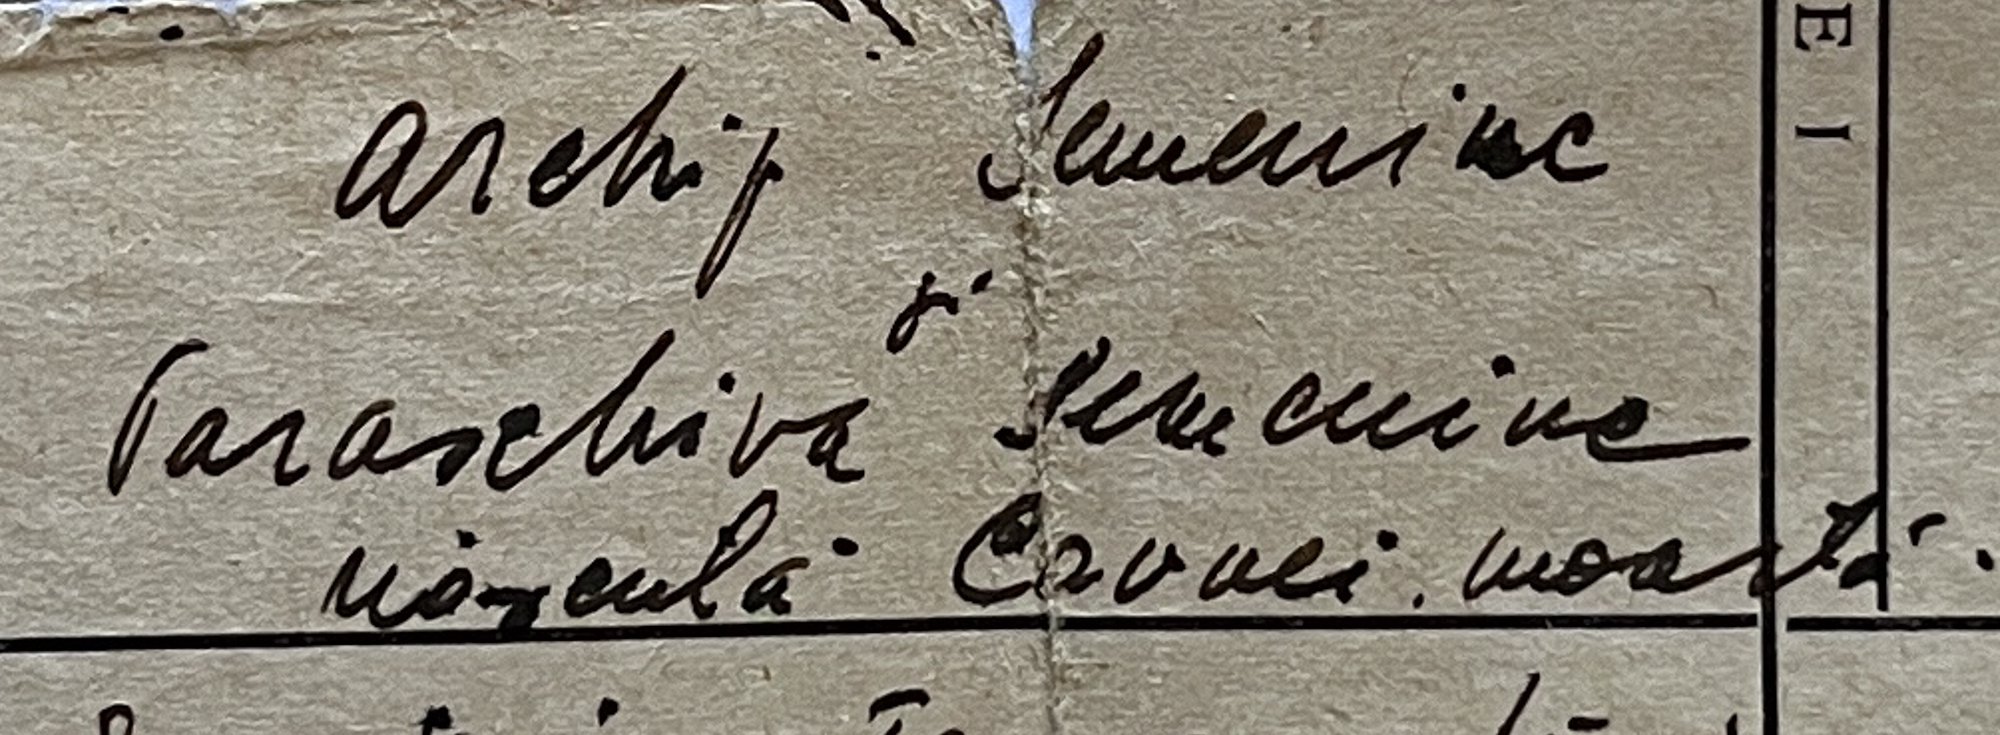  Excerpt from Grandma Maria’s marriage certificate, Feb 1945.   Under the ‘parents’ section reads: Archip Semeniuc and Paraschiva Semeniuc, nee Caunei, dead. 